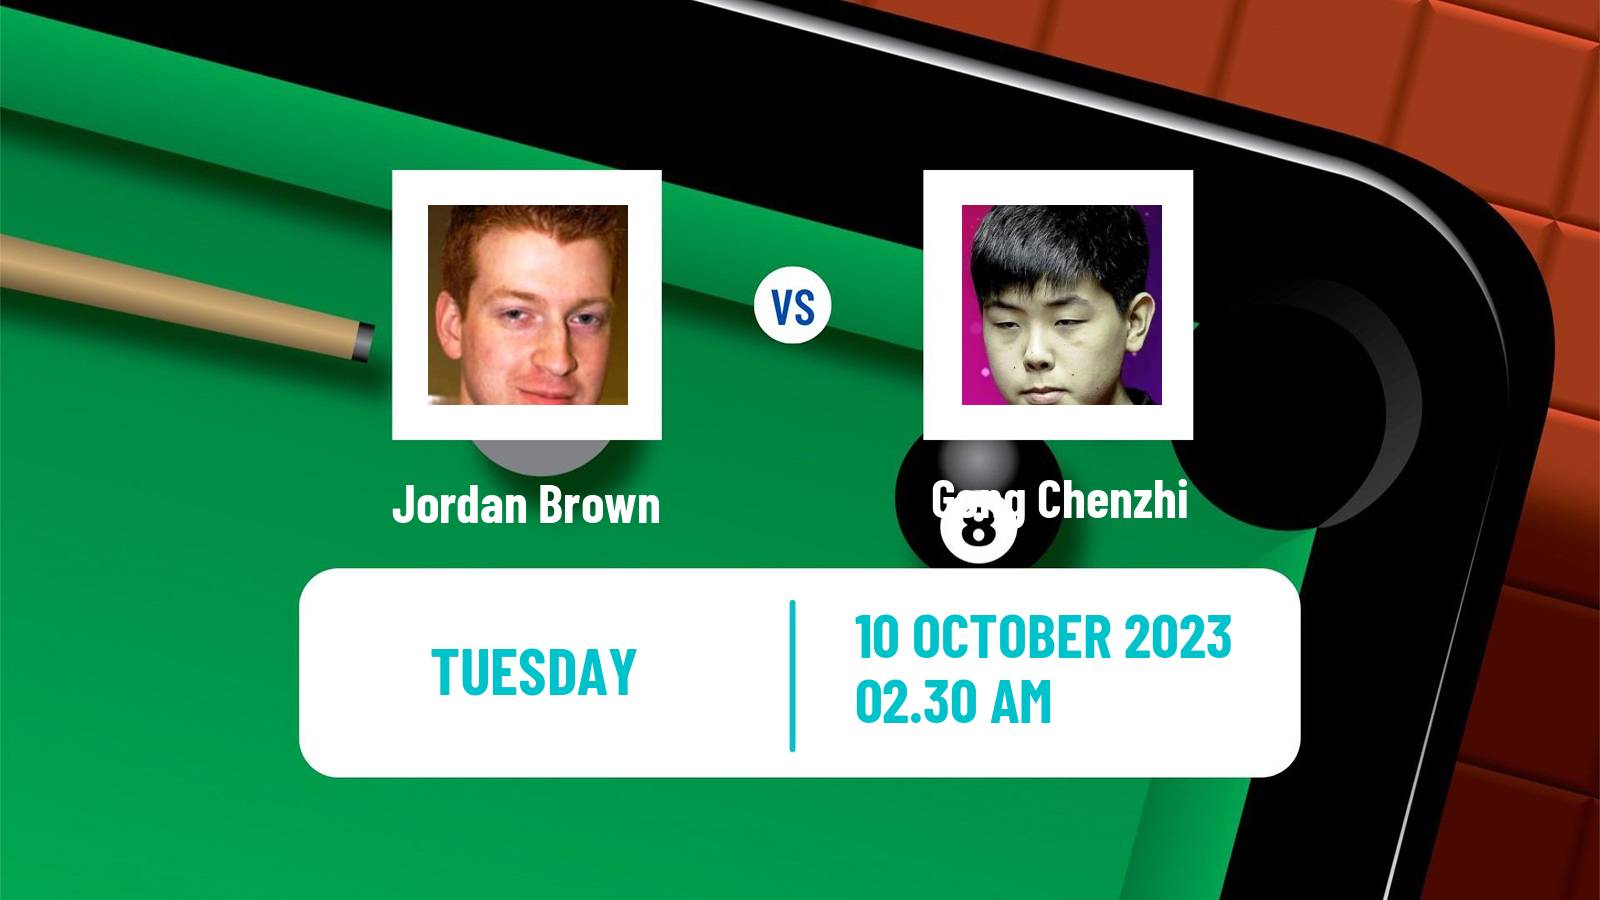 Snooker Wuhan Open Jordan Brown - Gong Chenzhi